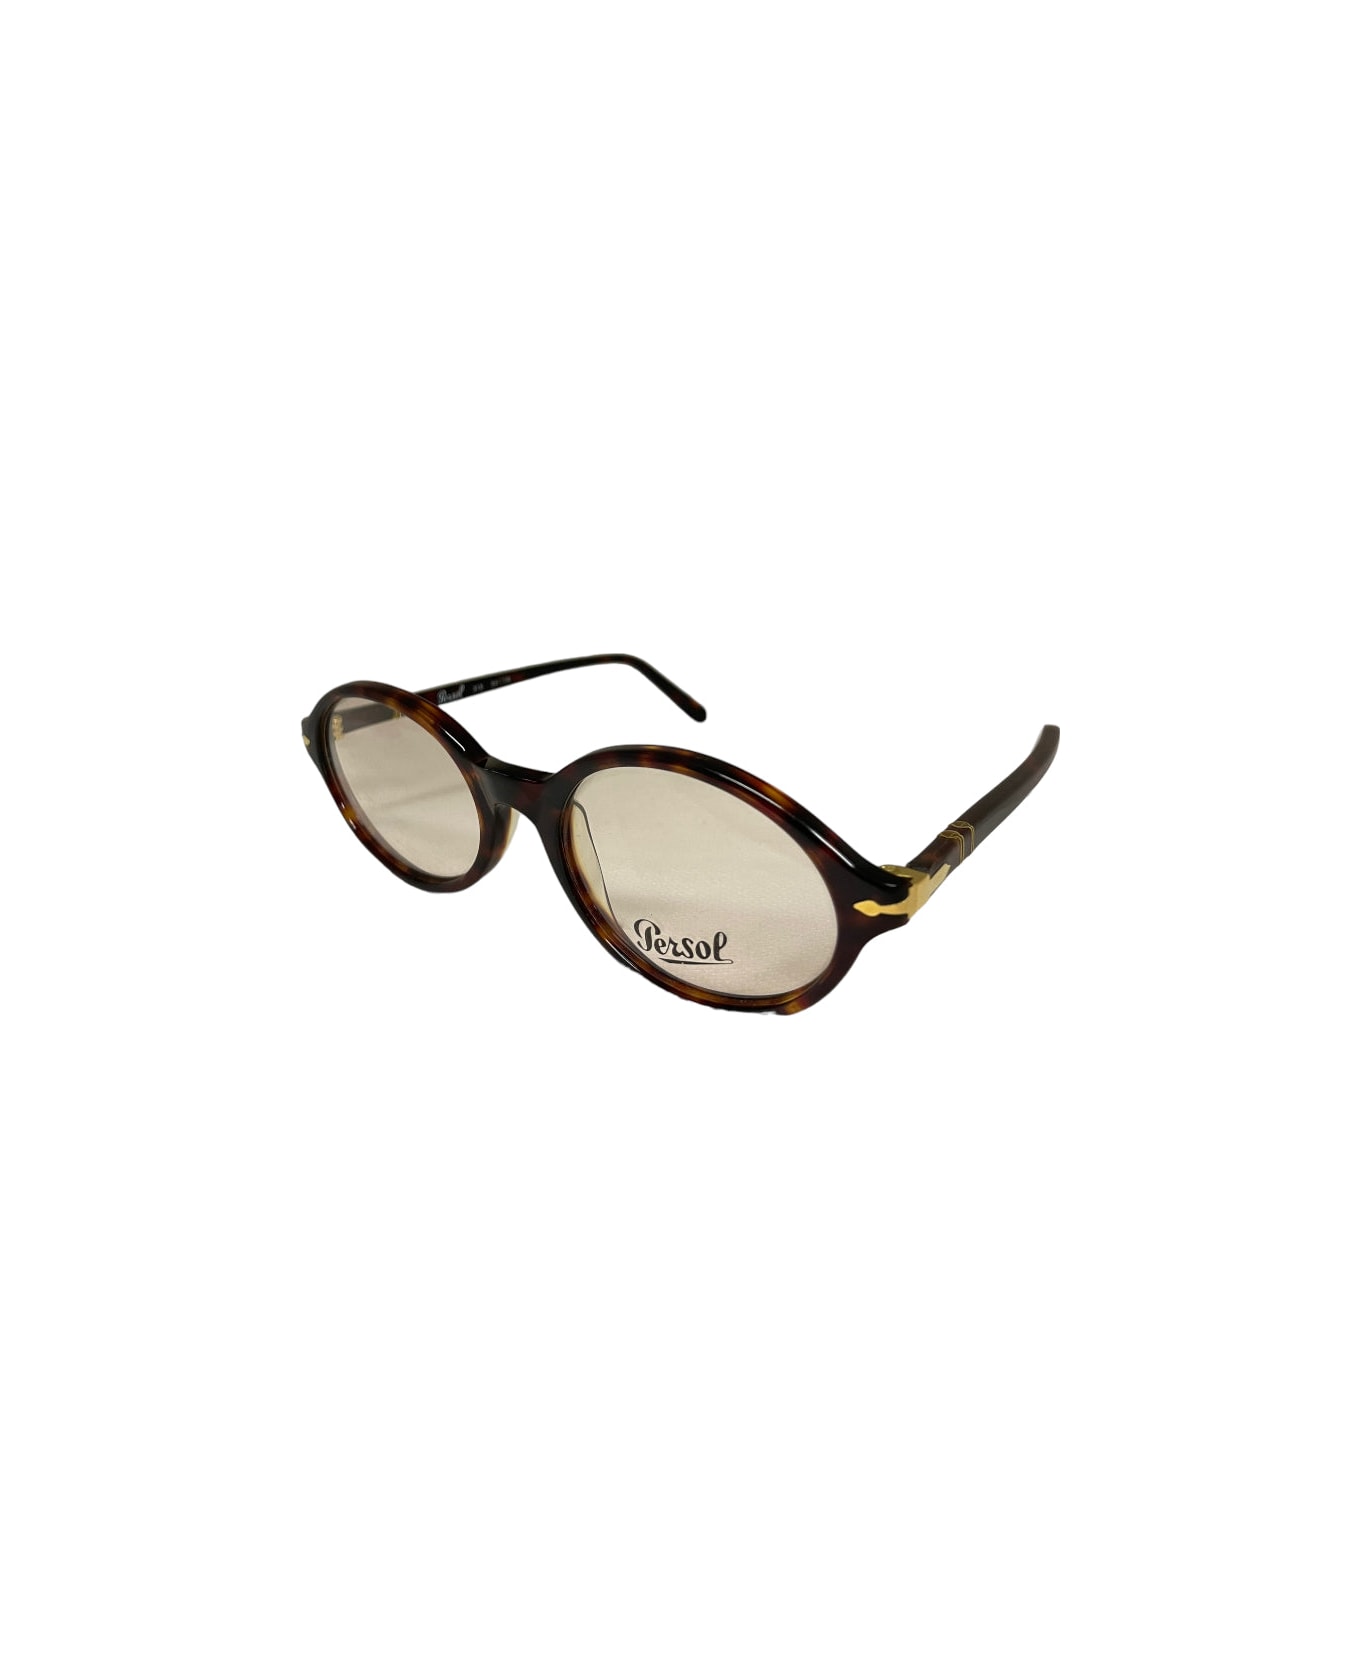 Persol 318 - Havana Sunglasses サングラス